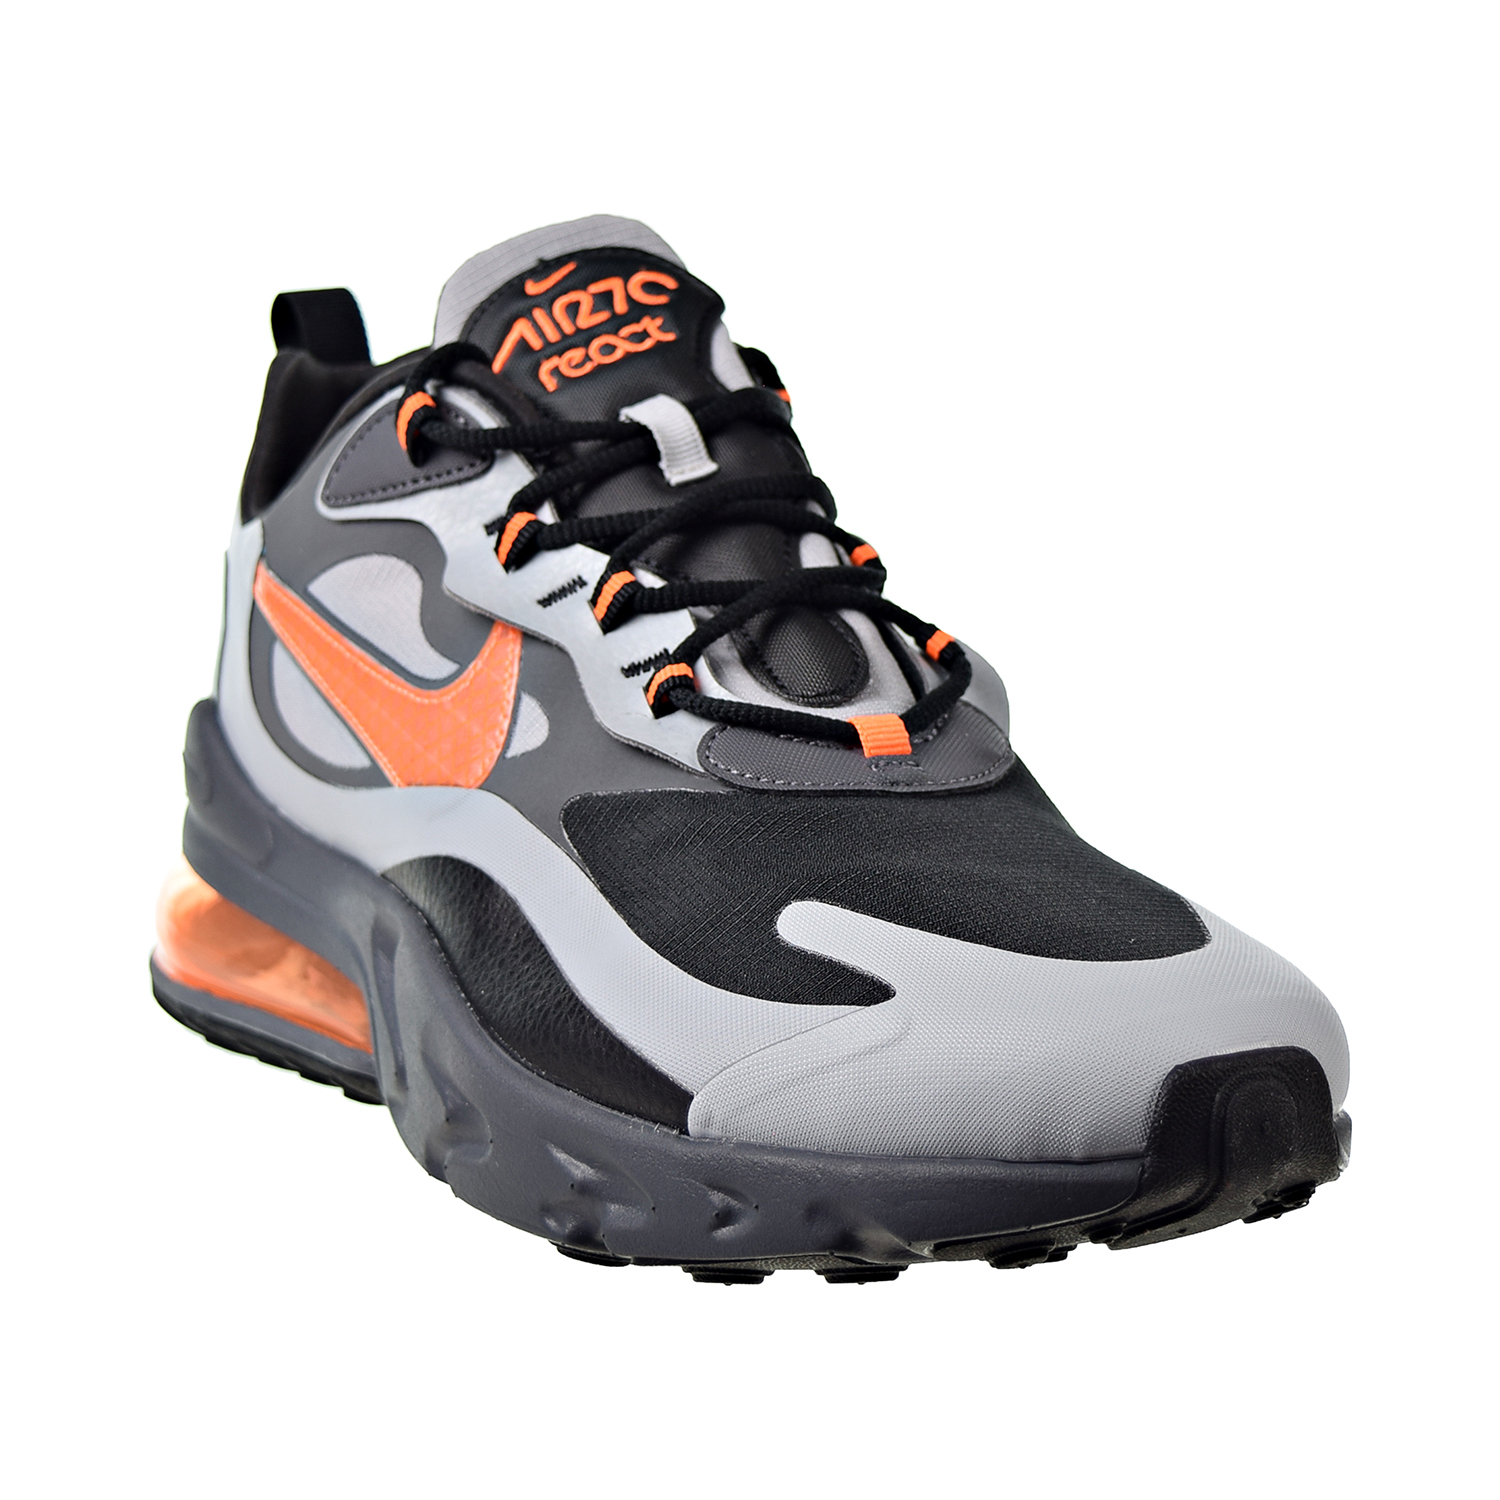 Nike Air Max 270 React Winter Casual Men's Shoes Wolf Grey-Total Orange-Black cd2049-006 - image 2 of 6